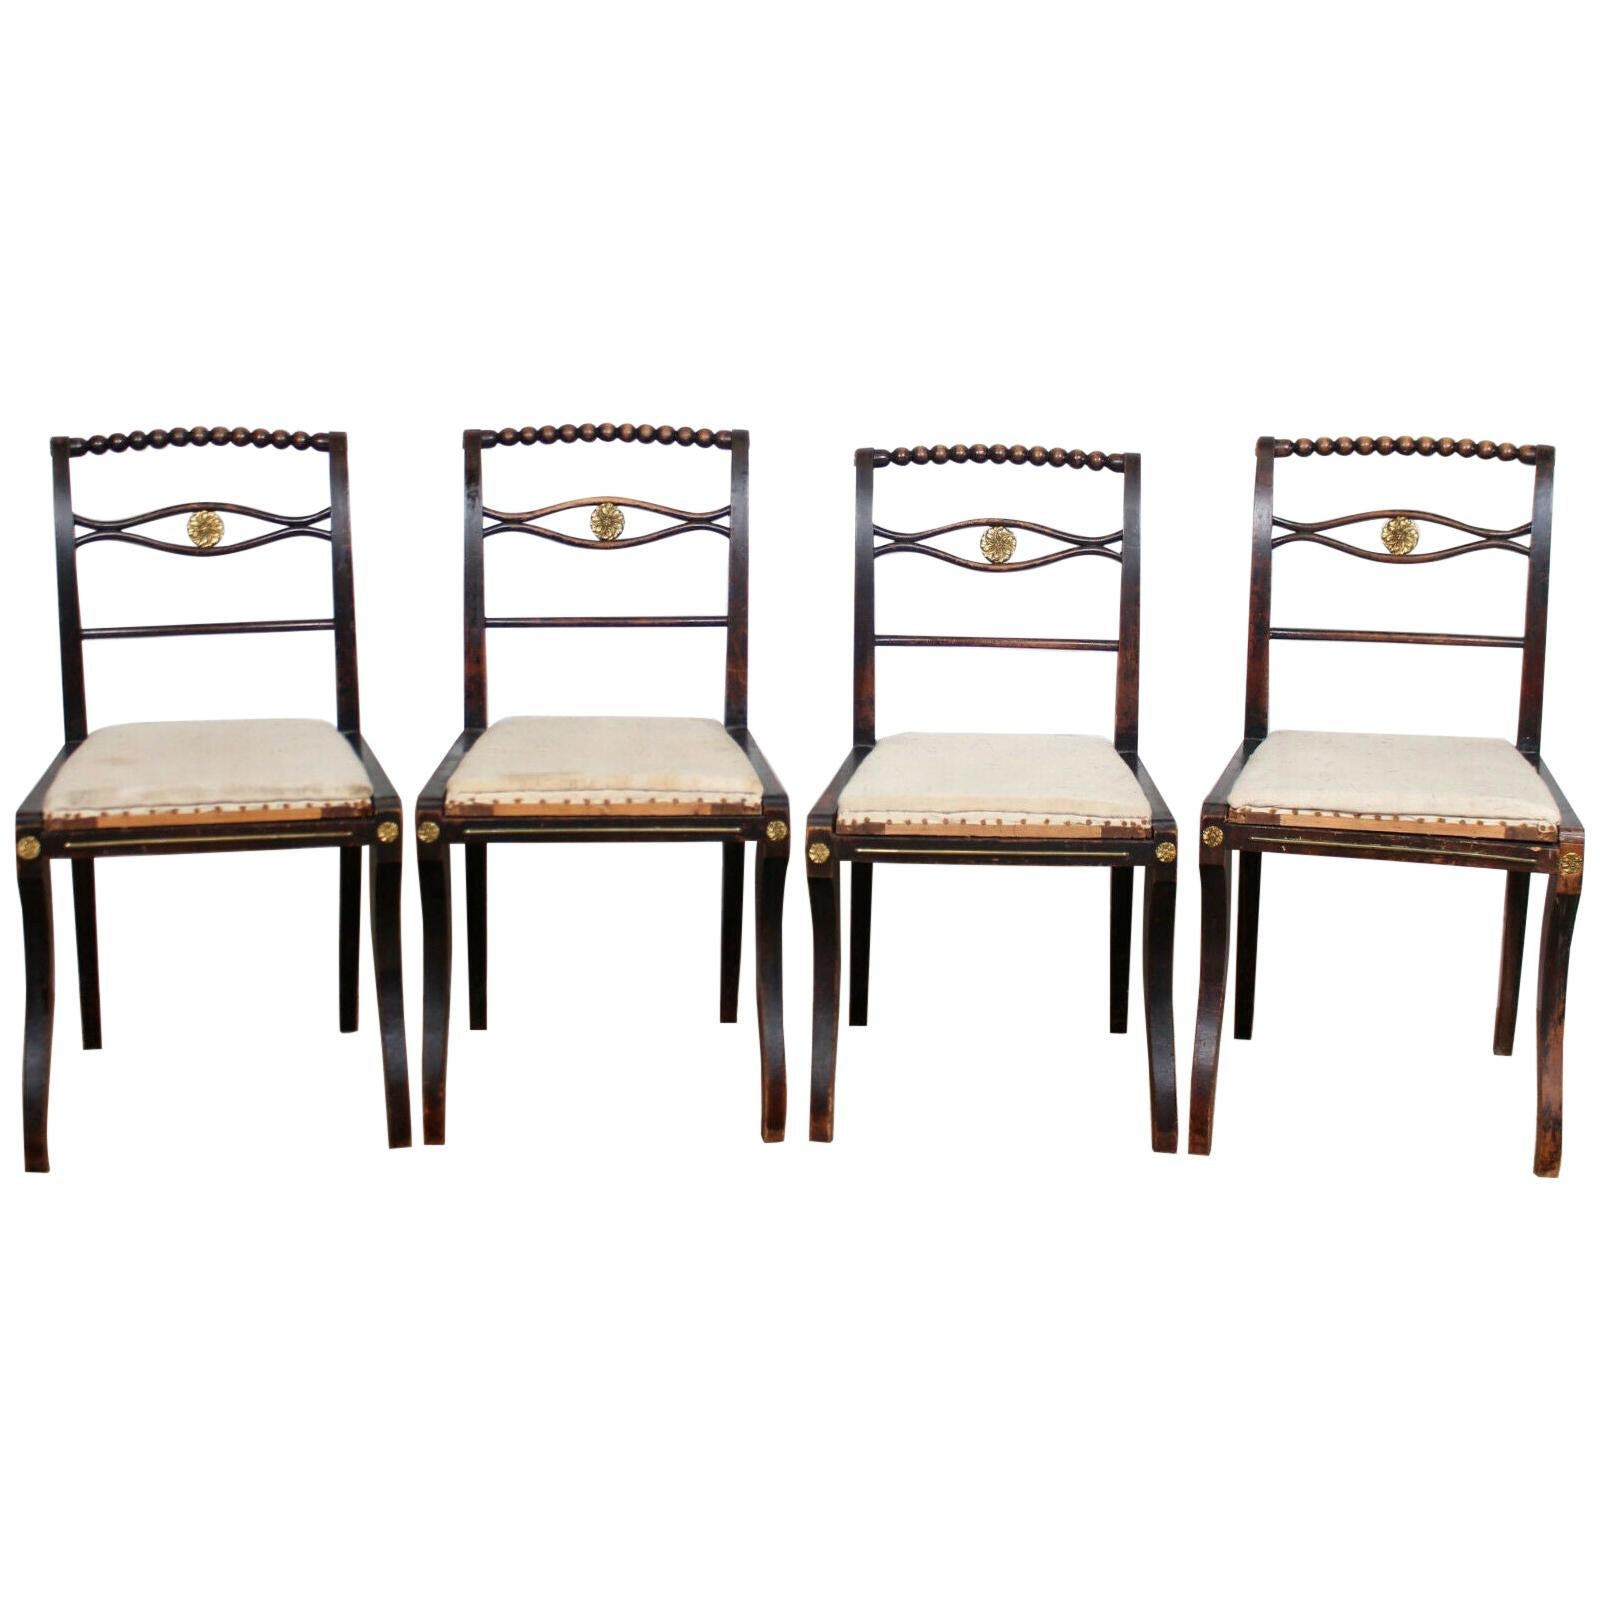 4 Regency Ebonised Dining Chairs Trafalgar, 19th Century For Sale